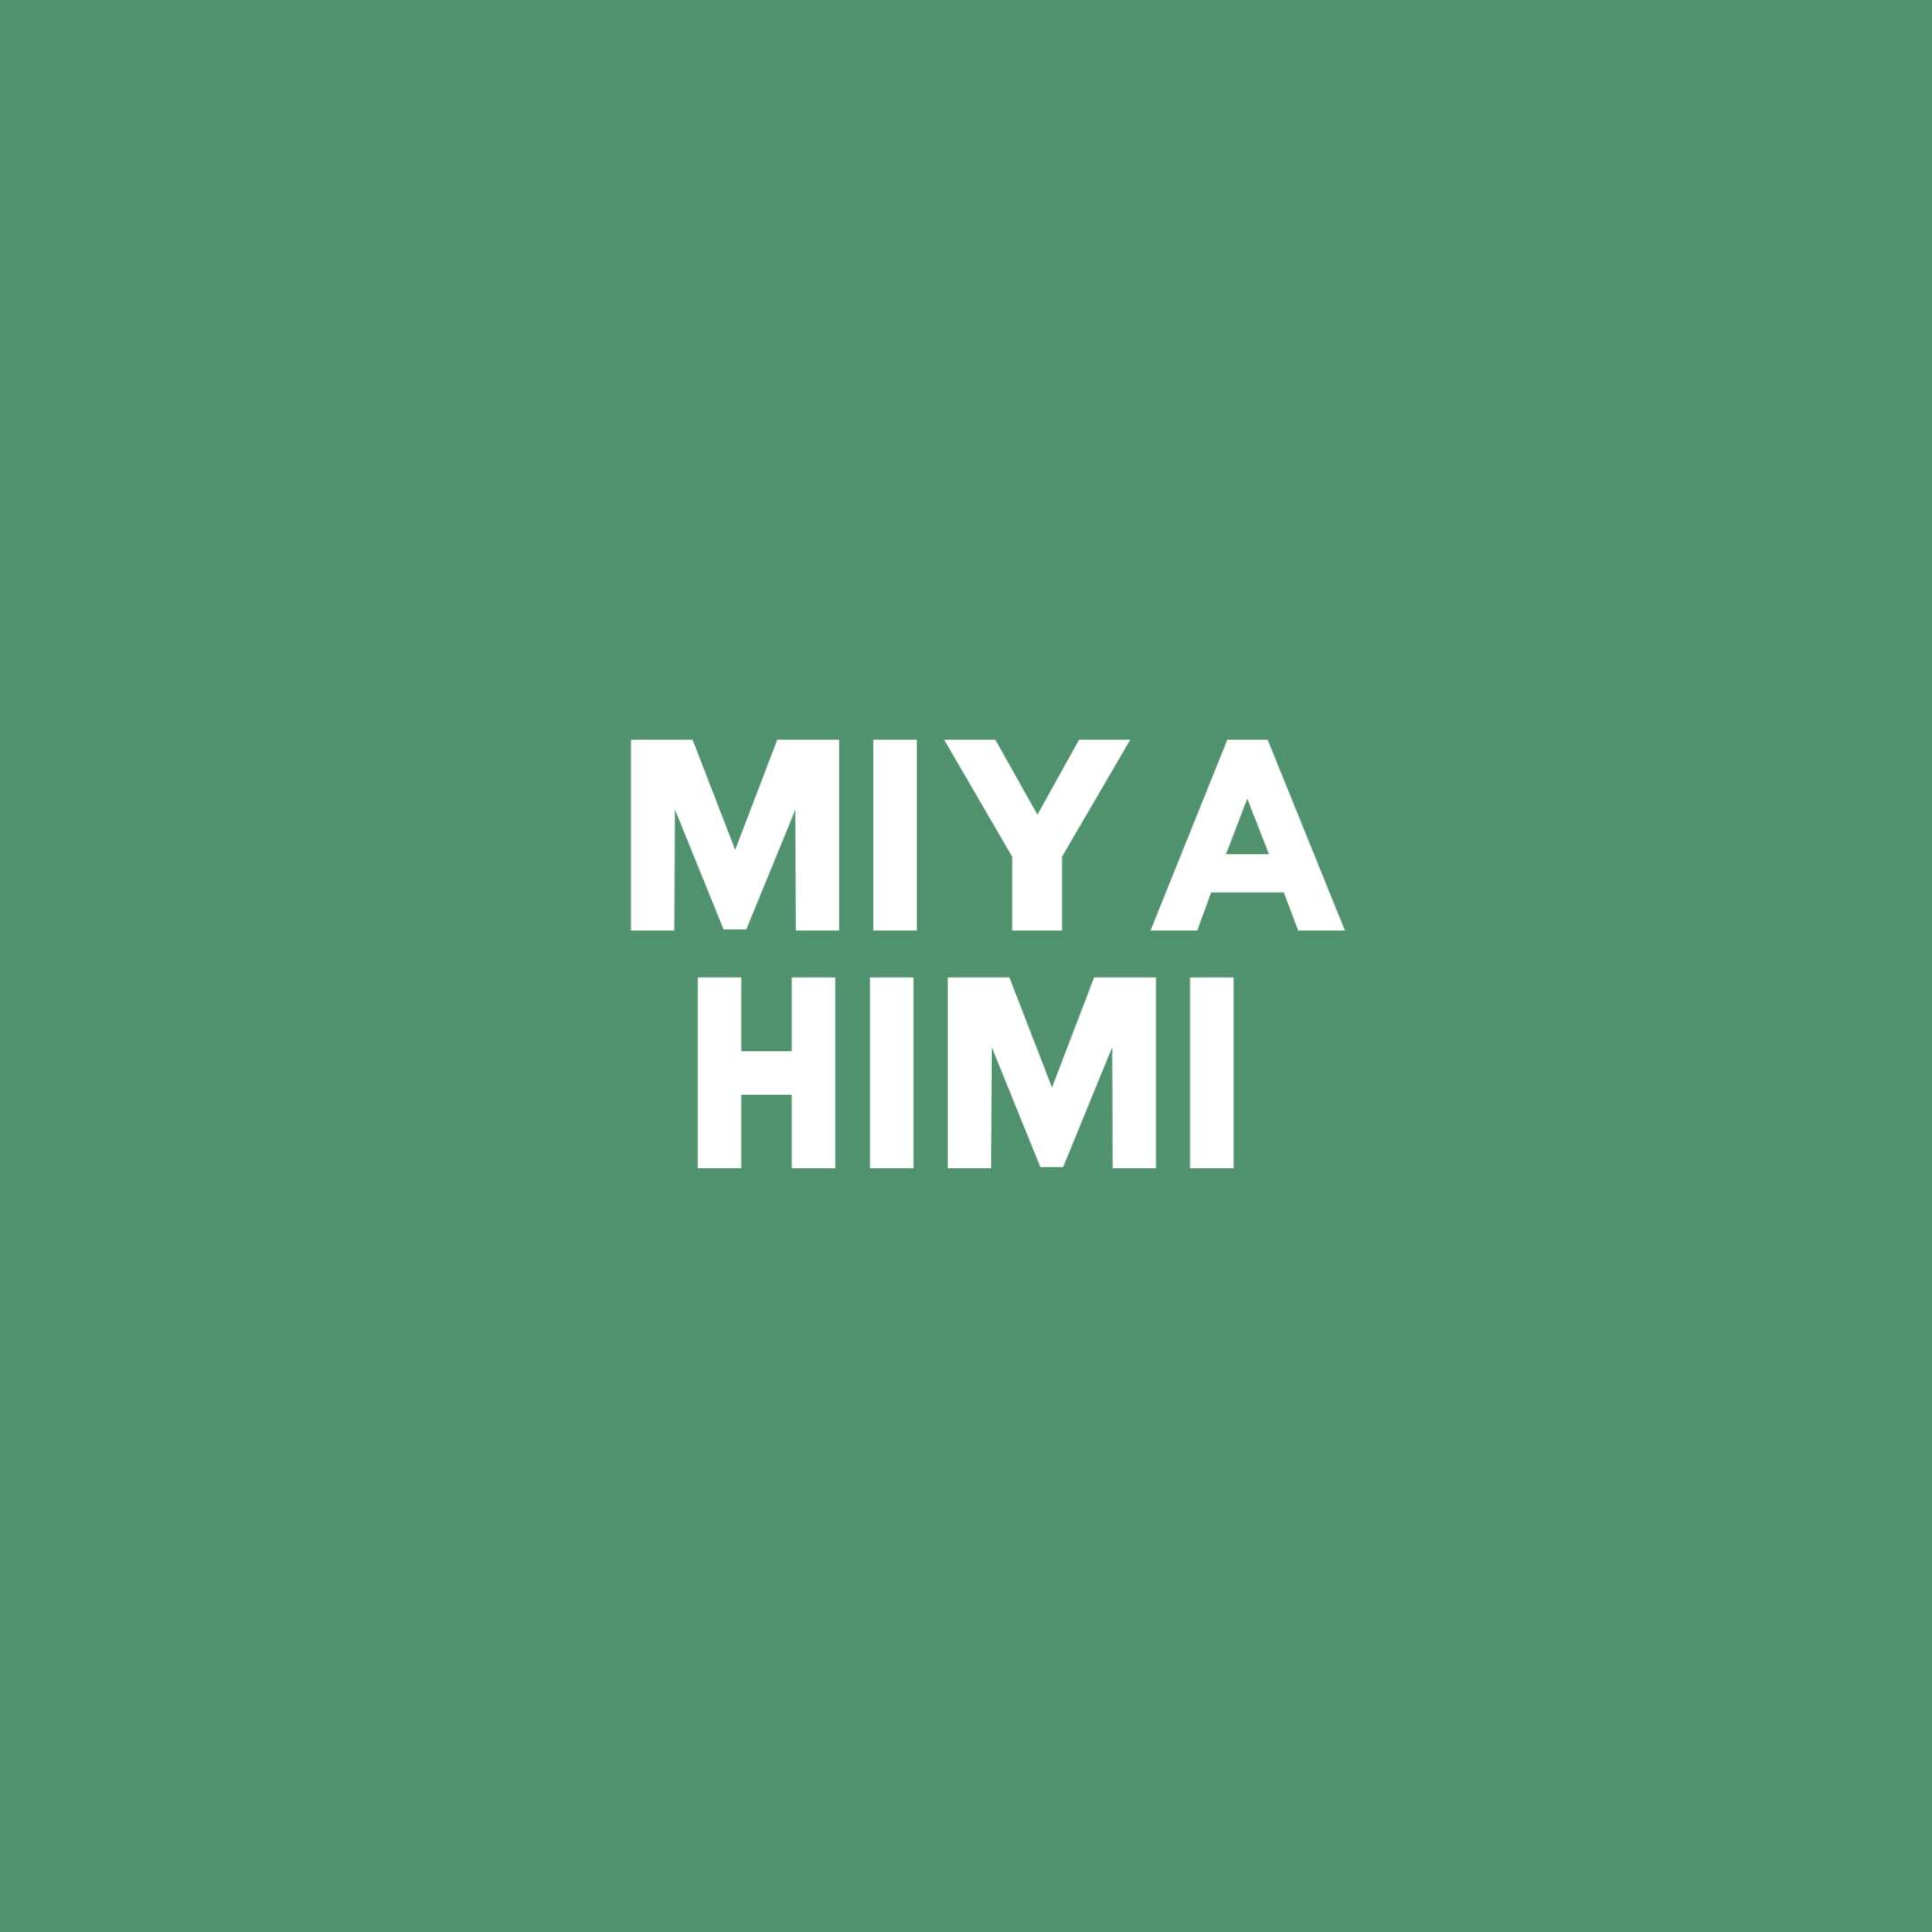 MIYA HIMI - The Craft Central